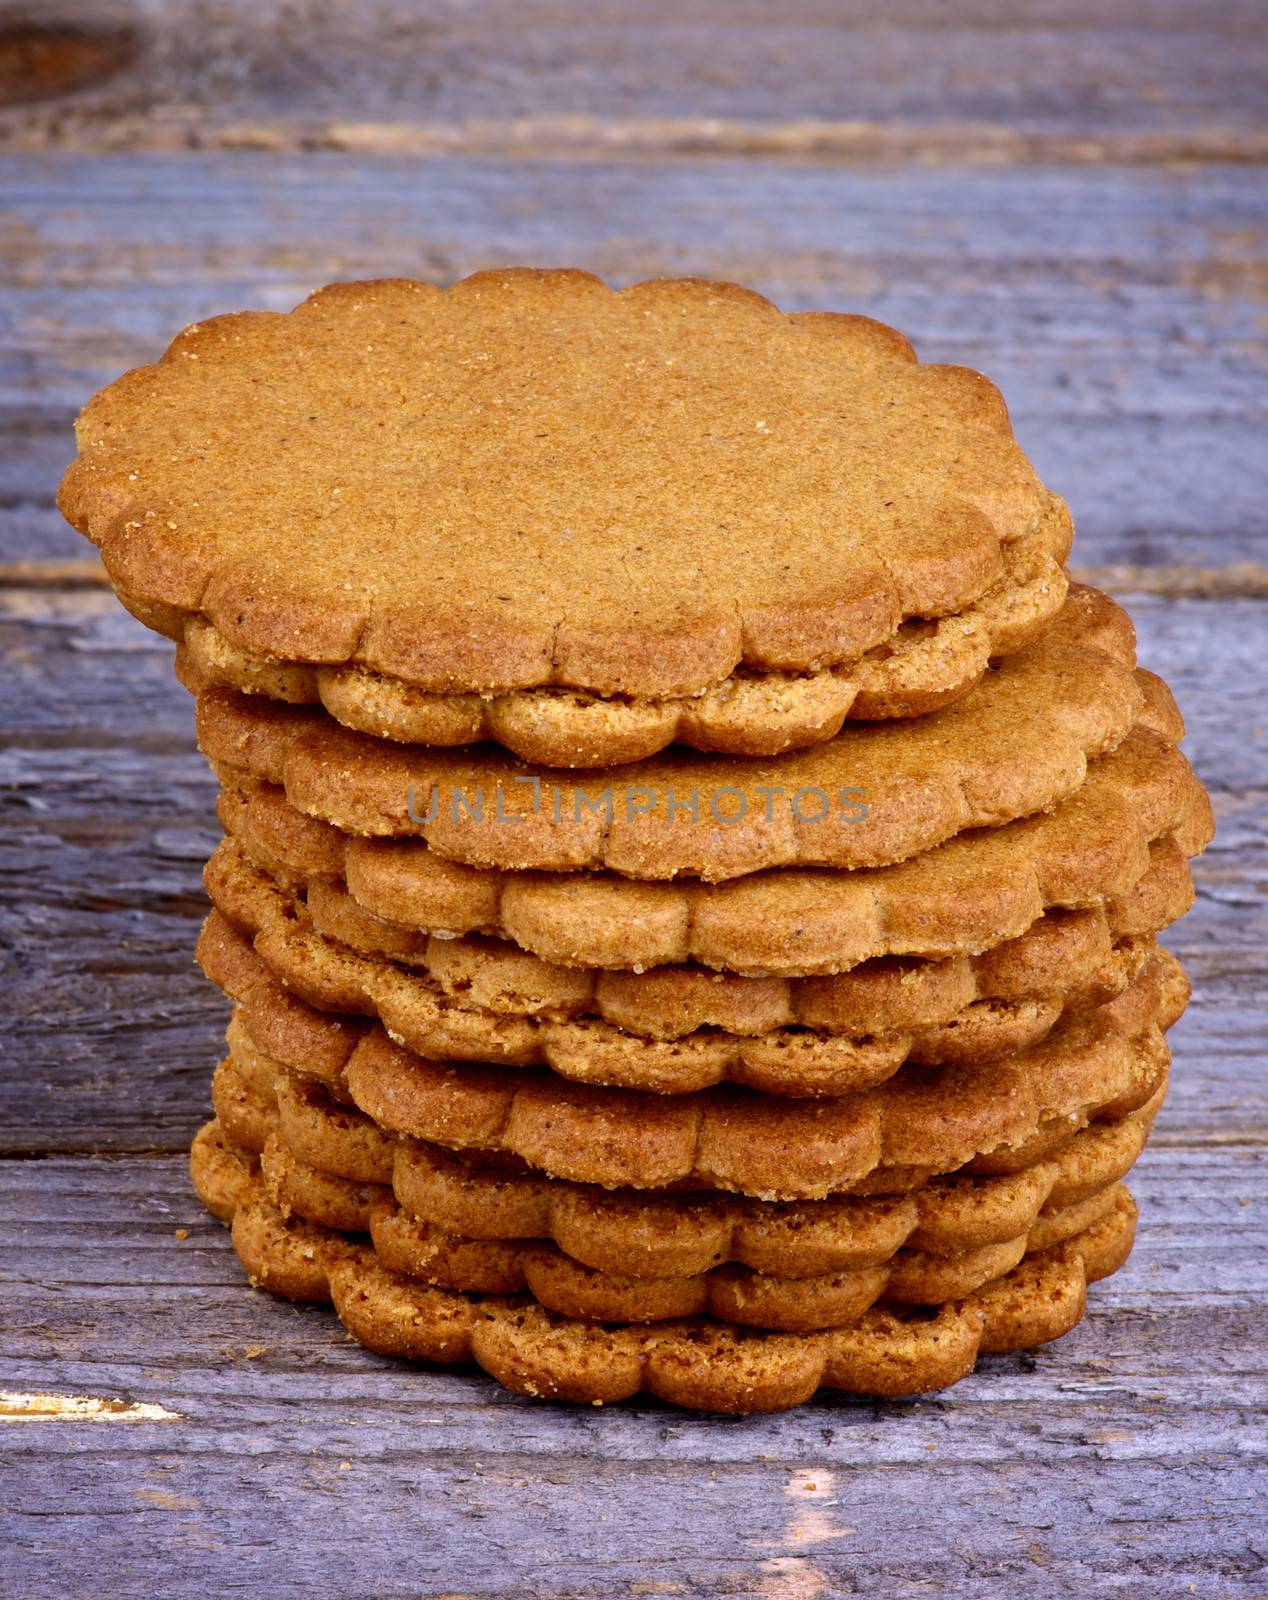 Ginger Cookies by zhekos